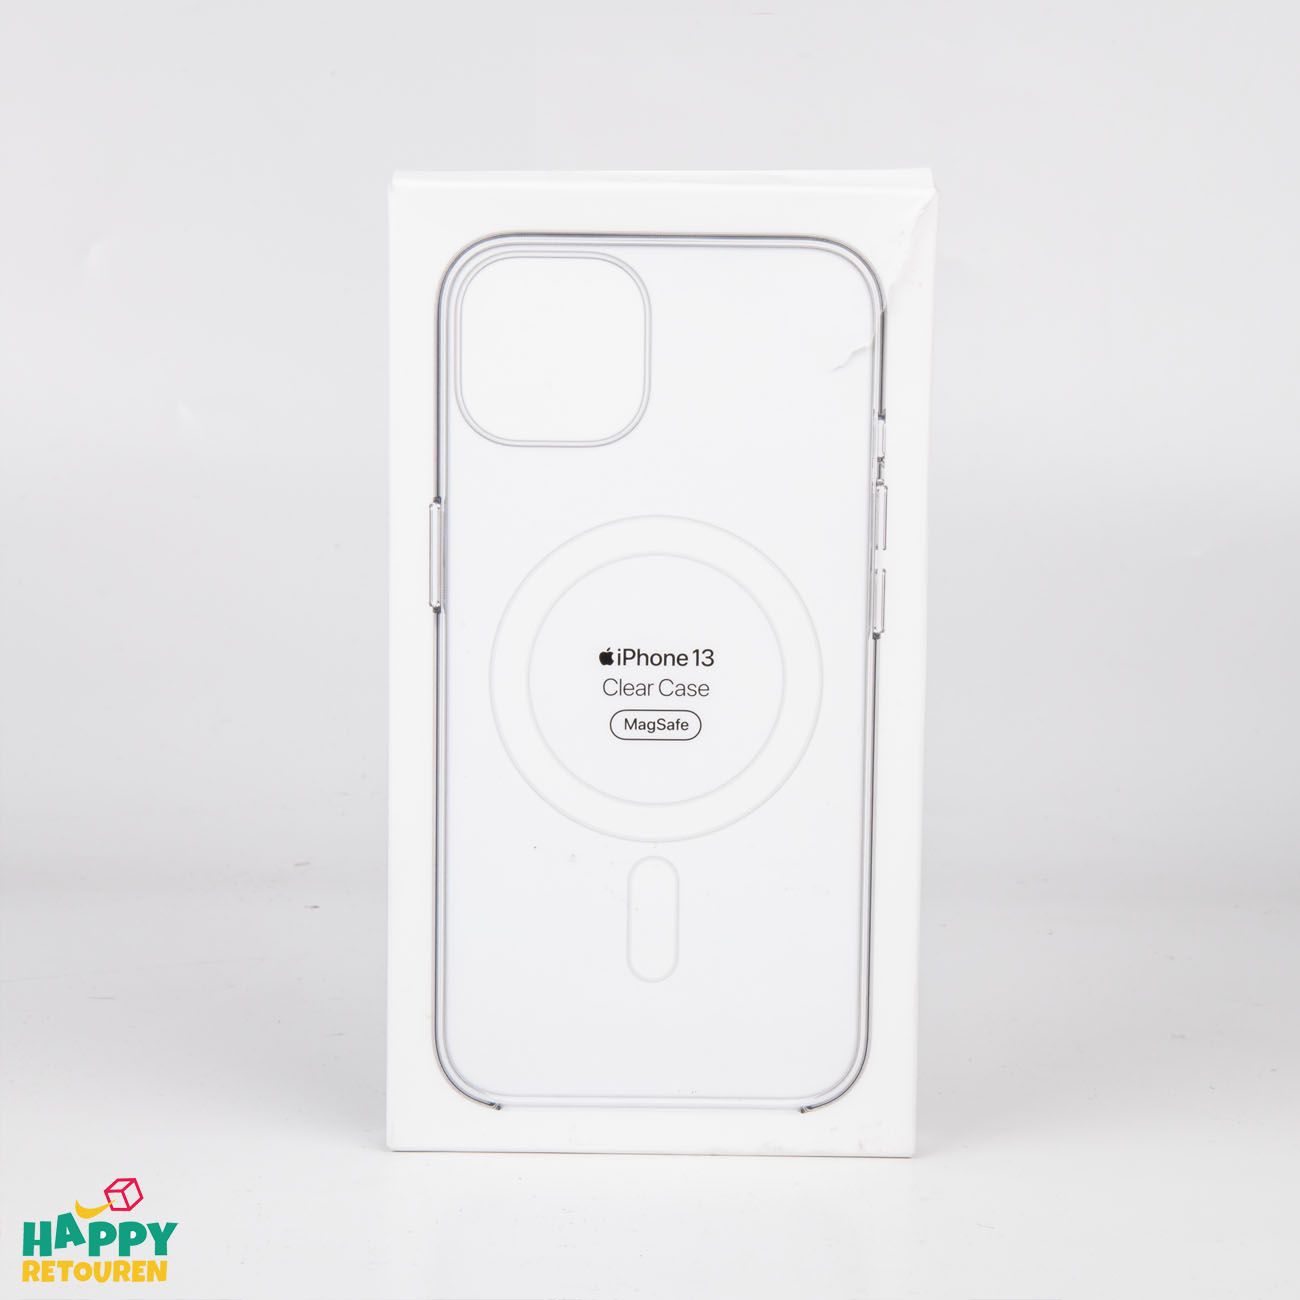 Happy mit Schutzhülle 13 Case - Apple IPhone Clear Original MagSafe Retouren Hülle